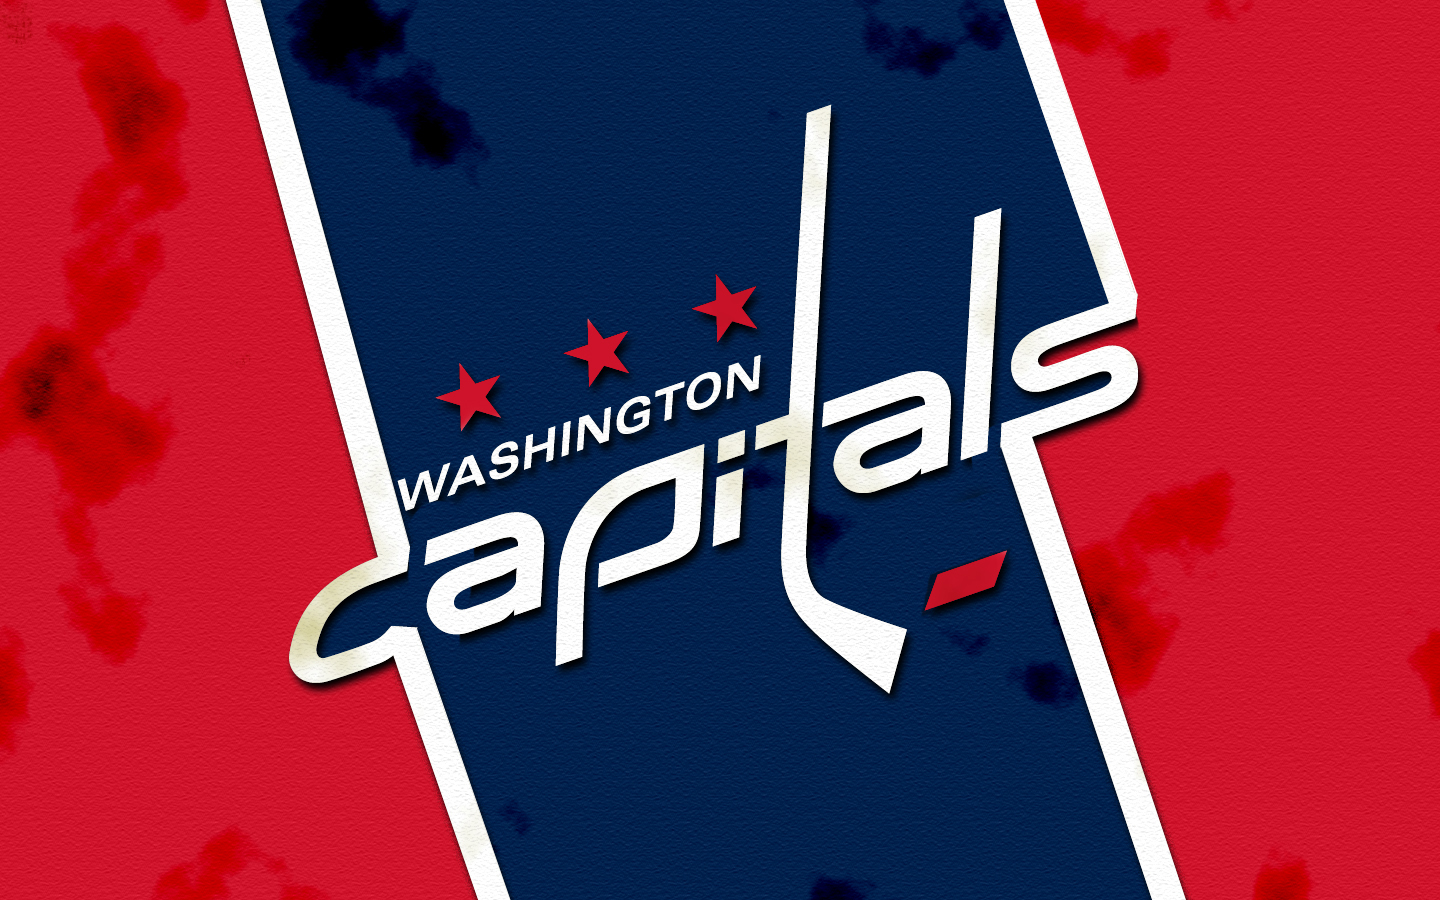 Washington Capitals - Multimedia - Washington Capitals - Multimedia